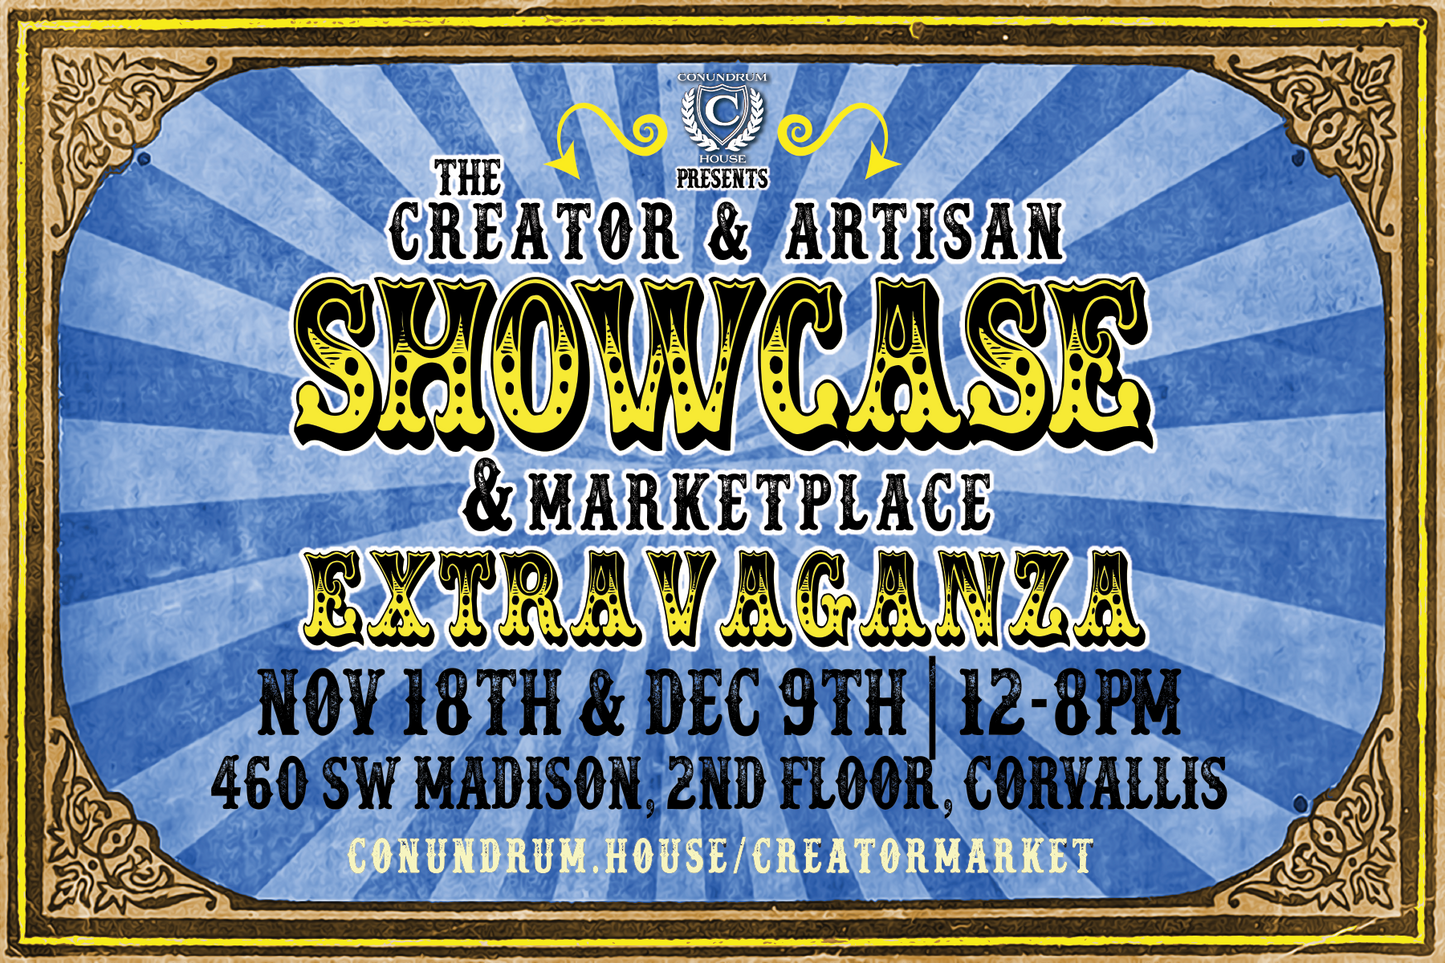 Creator & Artisan Showcase & Marketplace Extravaganza Vendor Promo Share